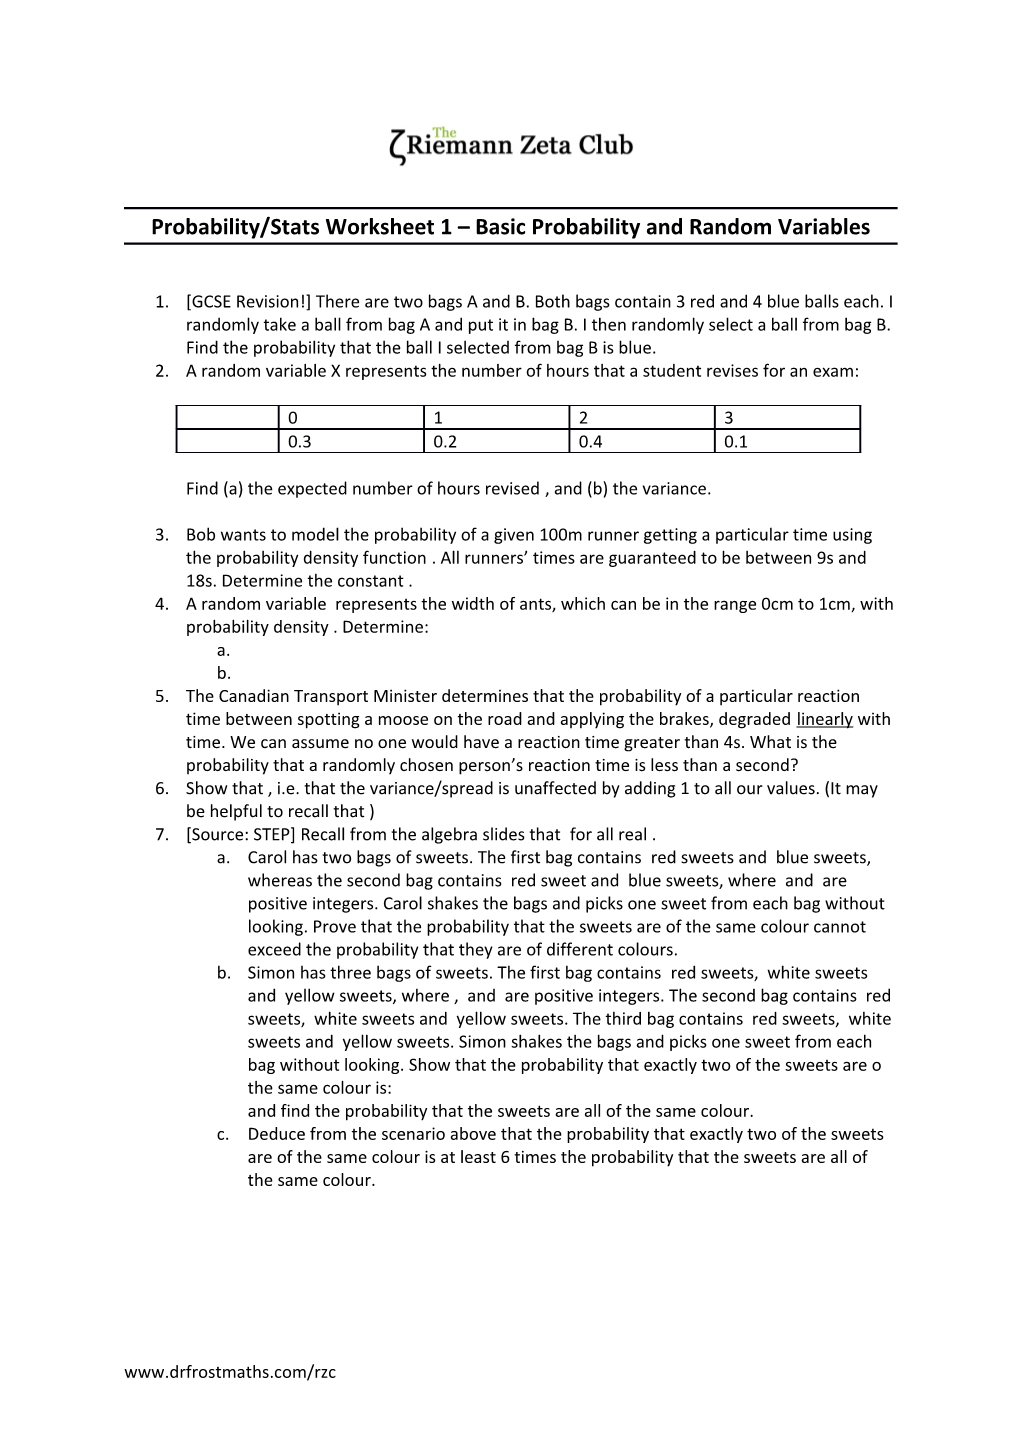 Probability/Stats Worksheet 1 Basic Probability and Random Variables